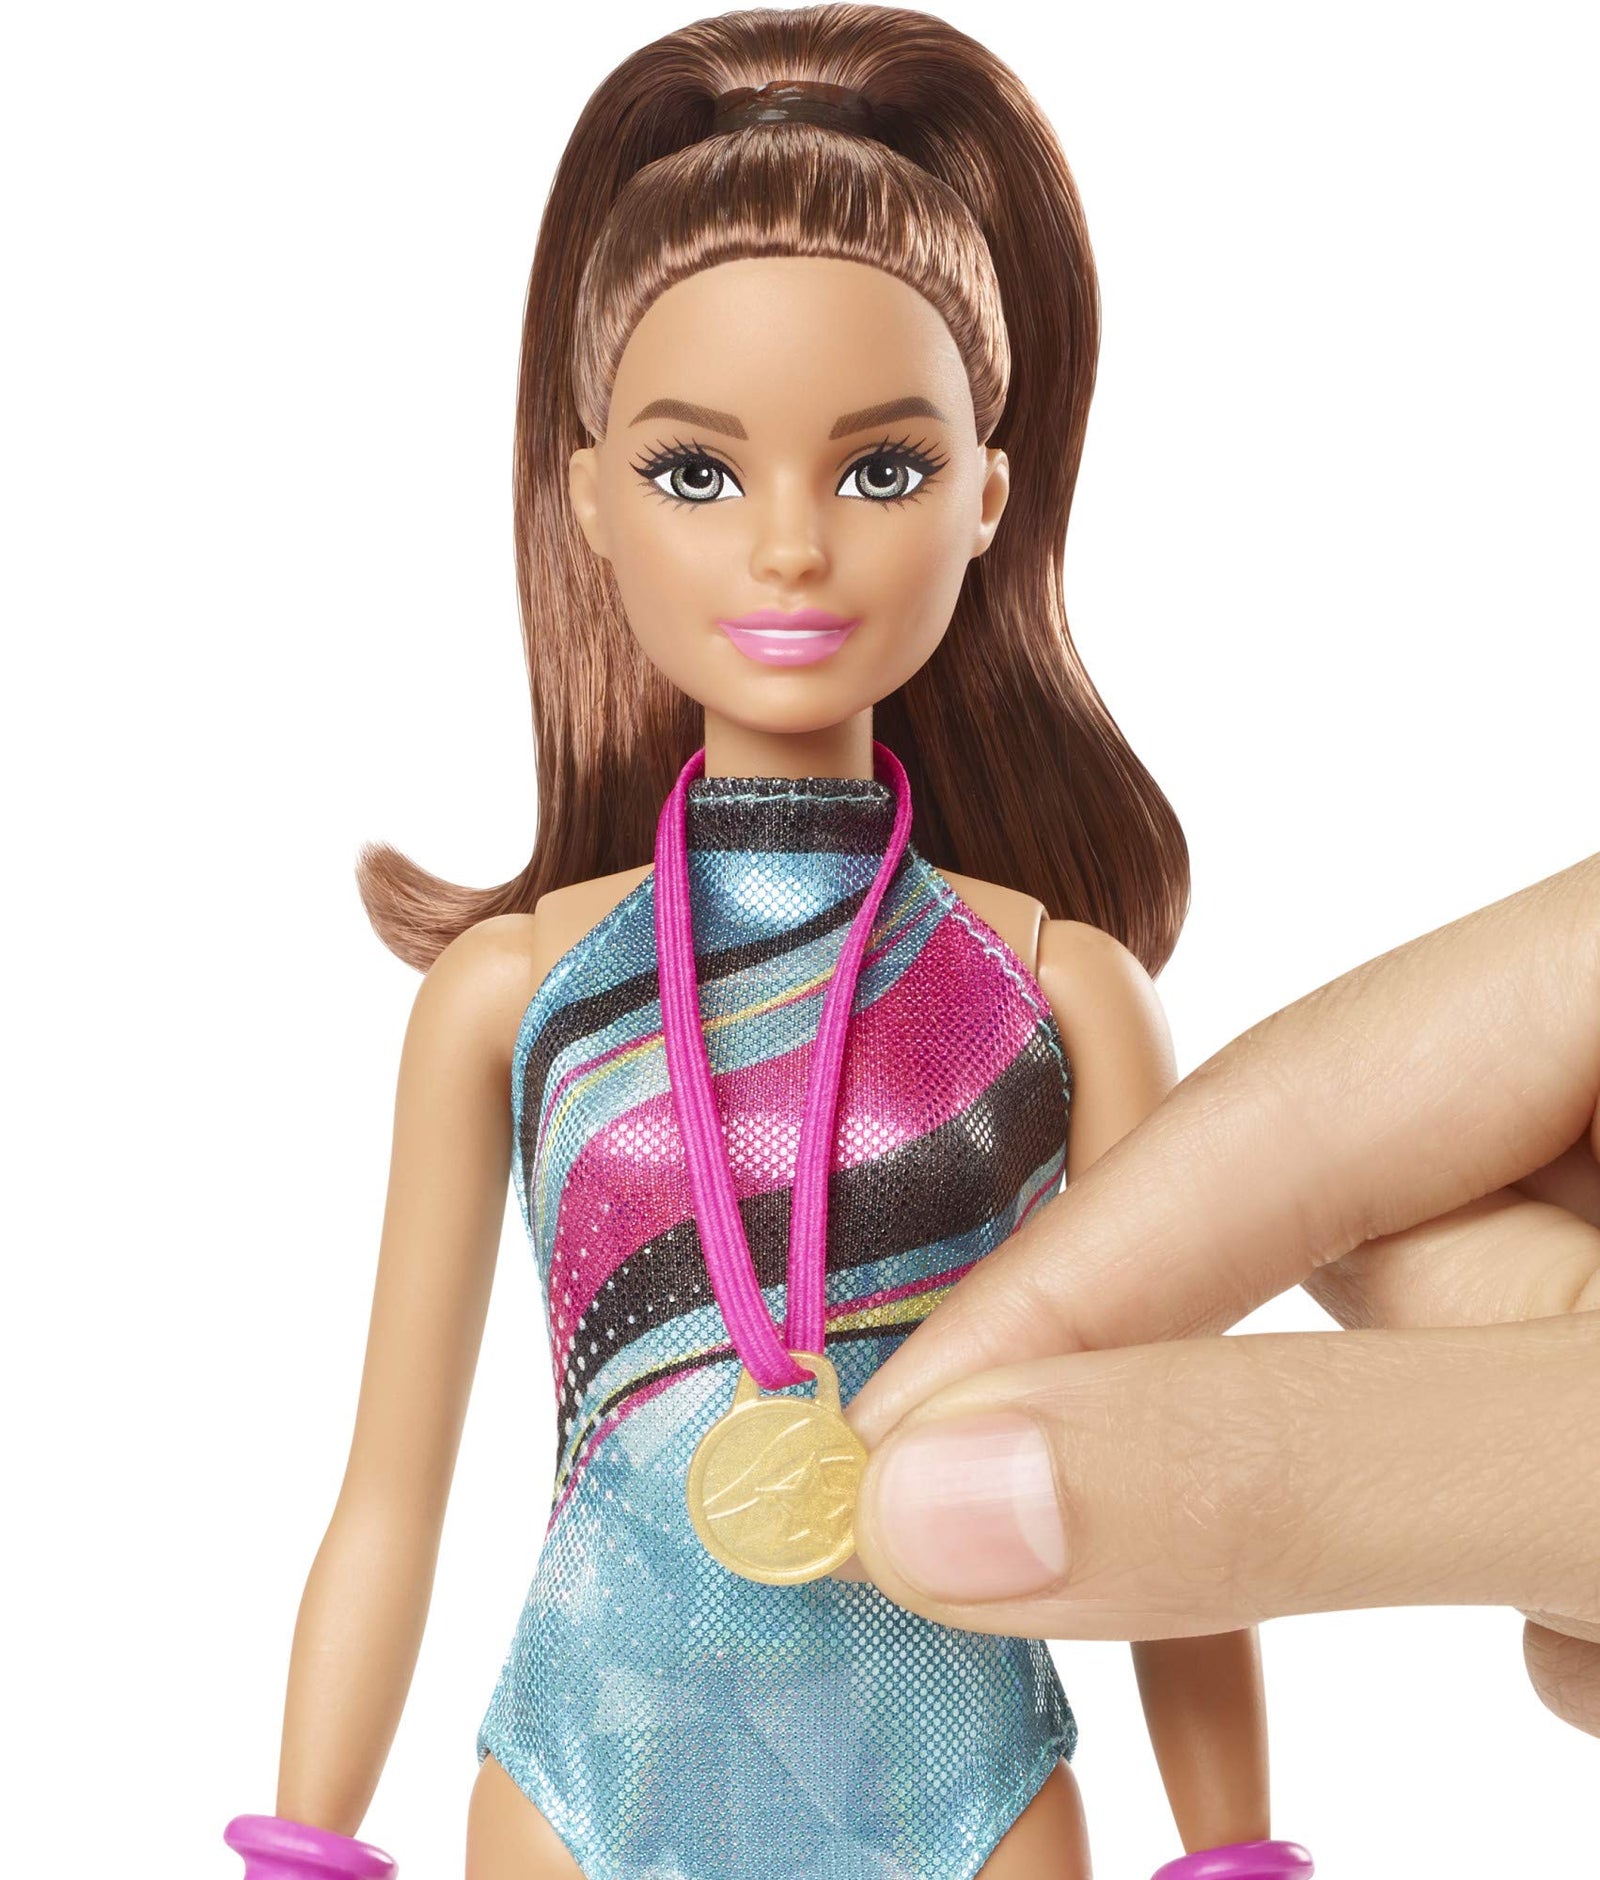 Barbie Dreamhouse Adventures Teresa Spin ‘n Twirl Gymnast Doll, 11.5-inch Brunette, in Leotard, with Accessories